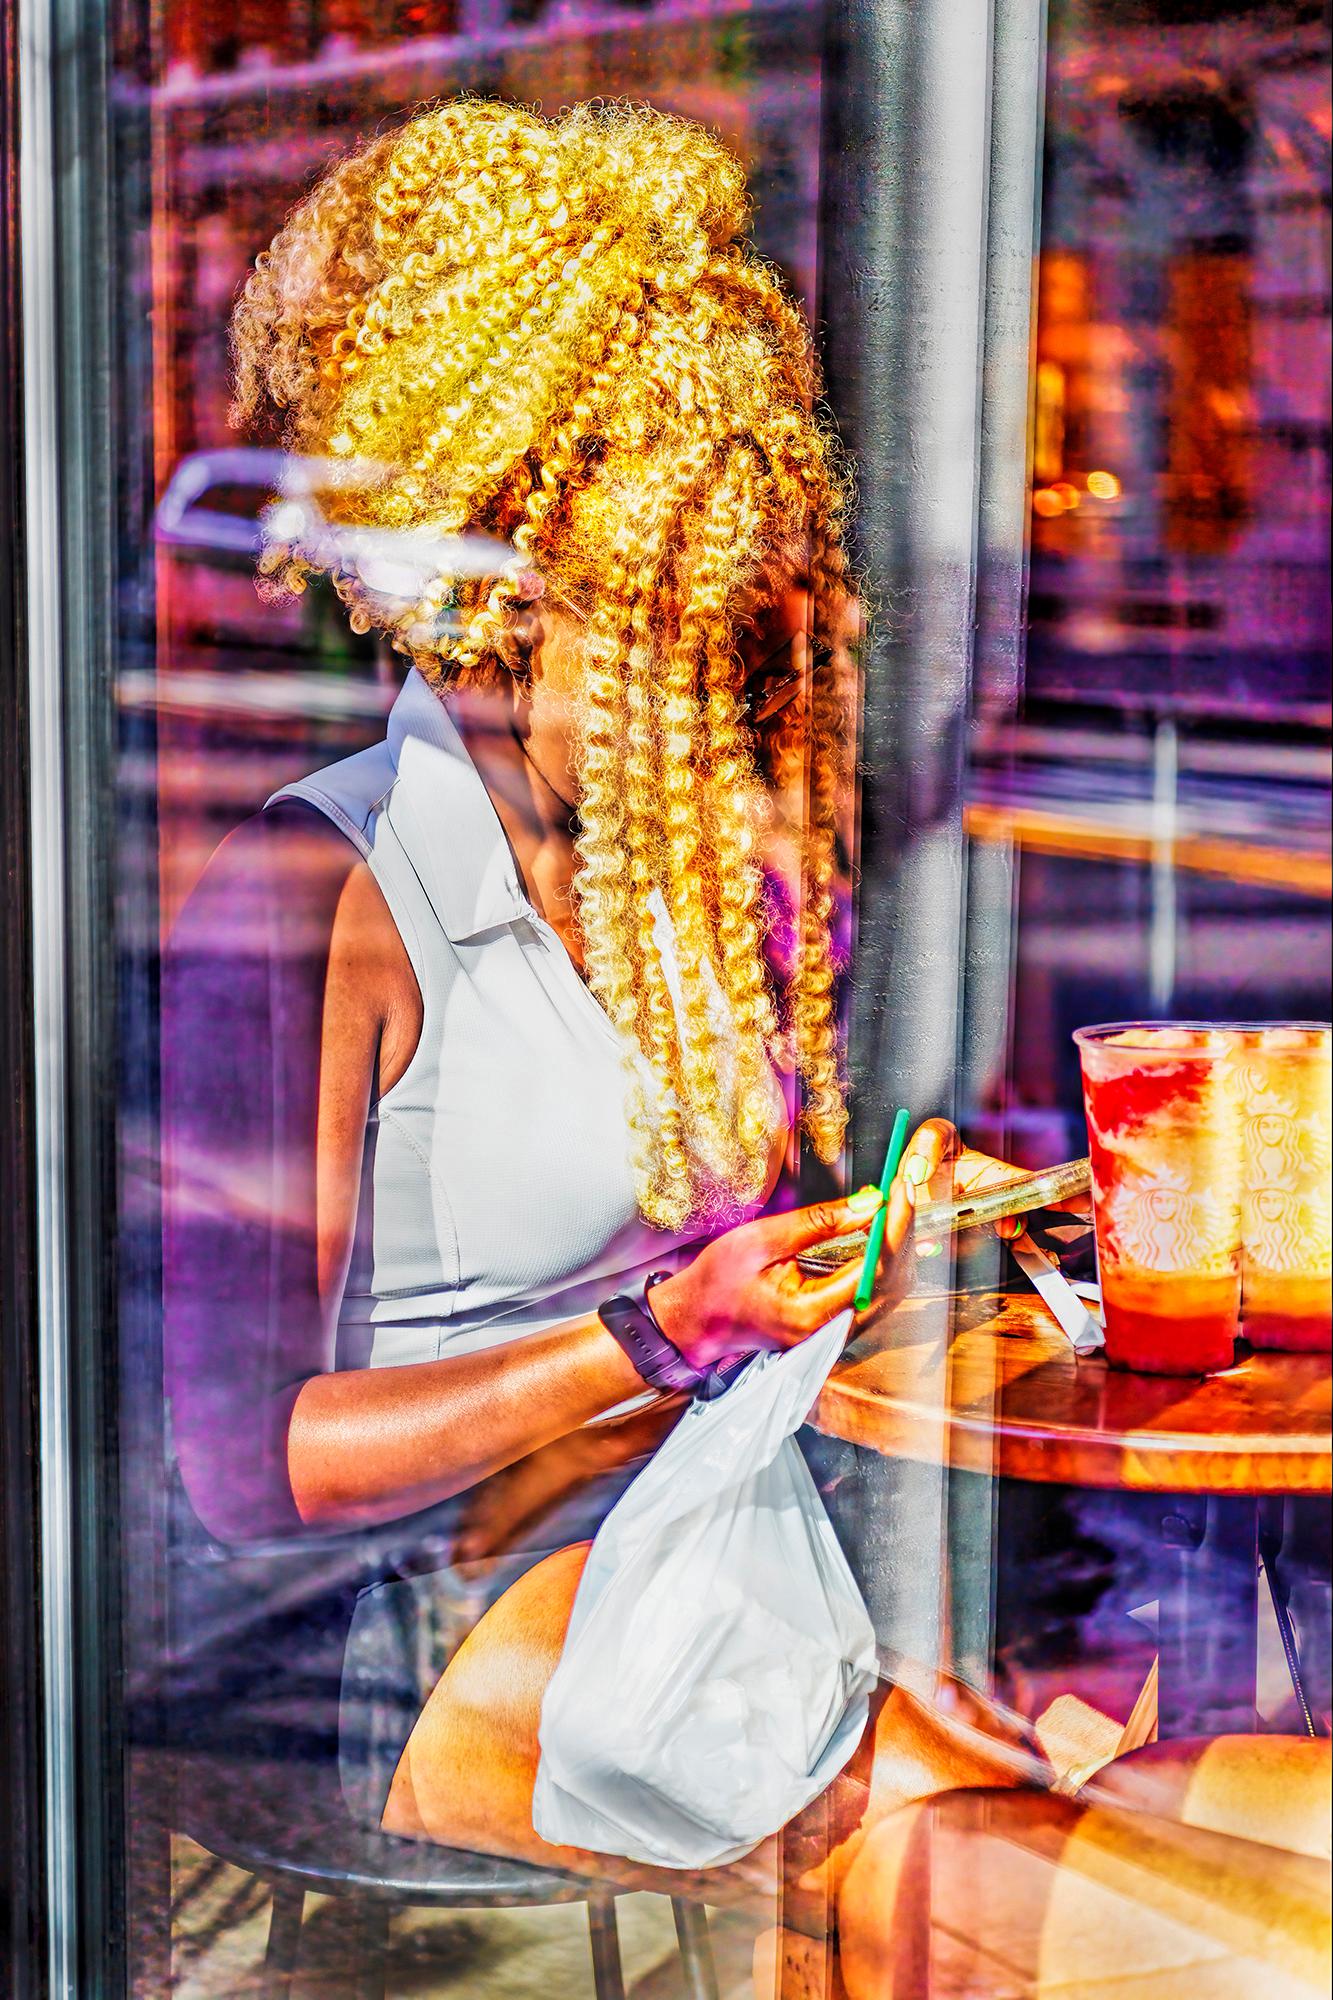 Black Woman with Flamboyant Hair at Cafe